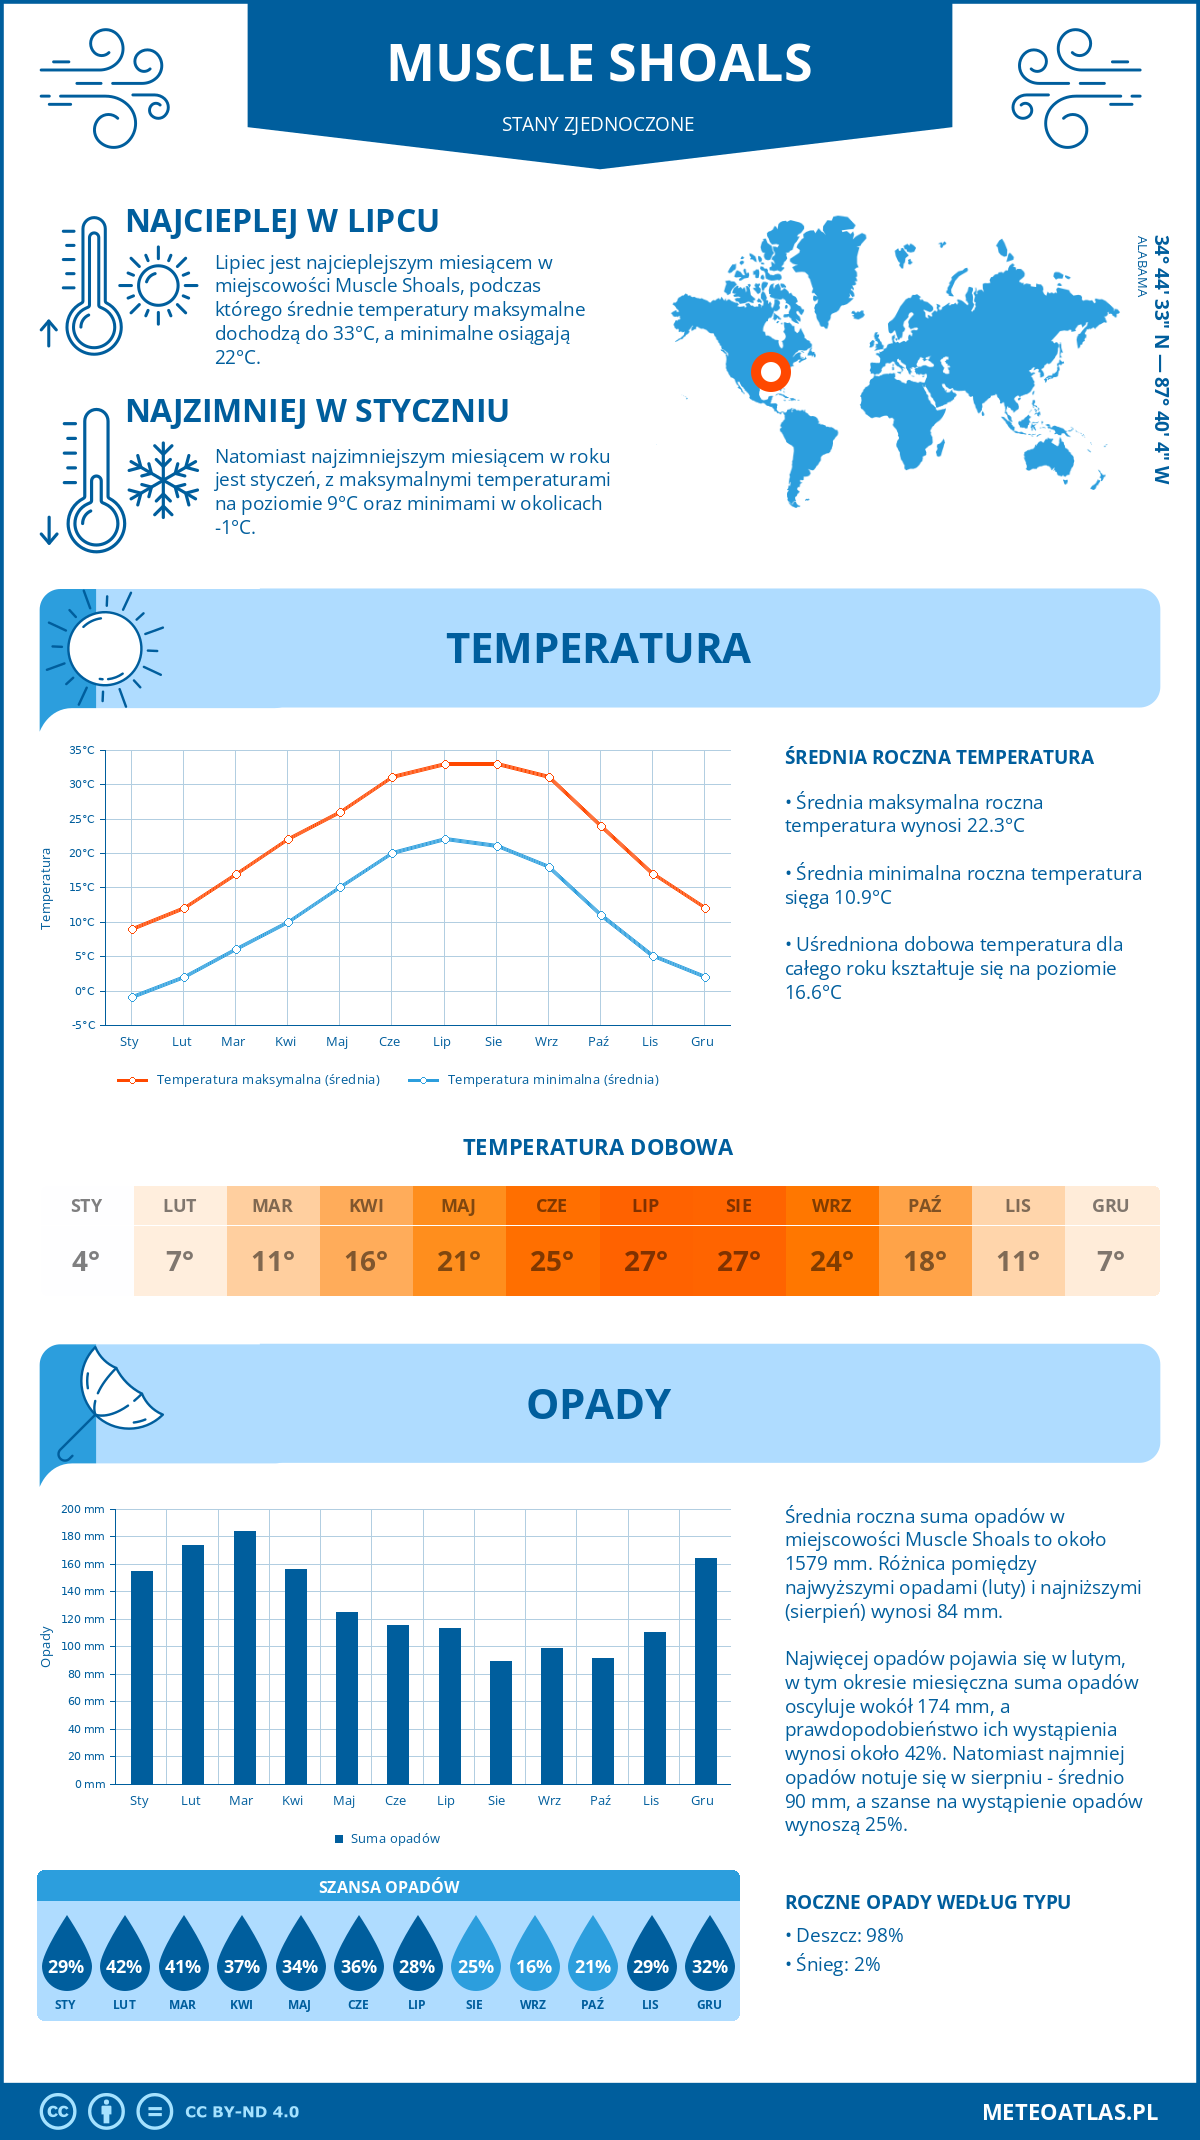 Pogoda Muscle Shoals (Stany Zjednoczone). Temperatura oraz opady.